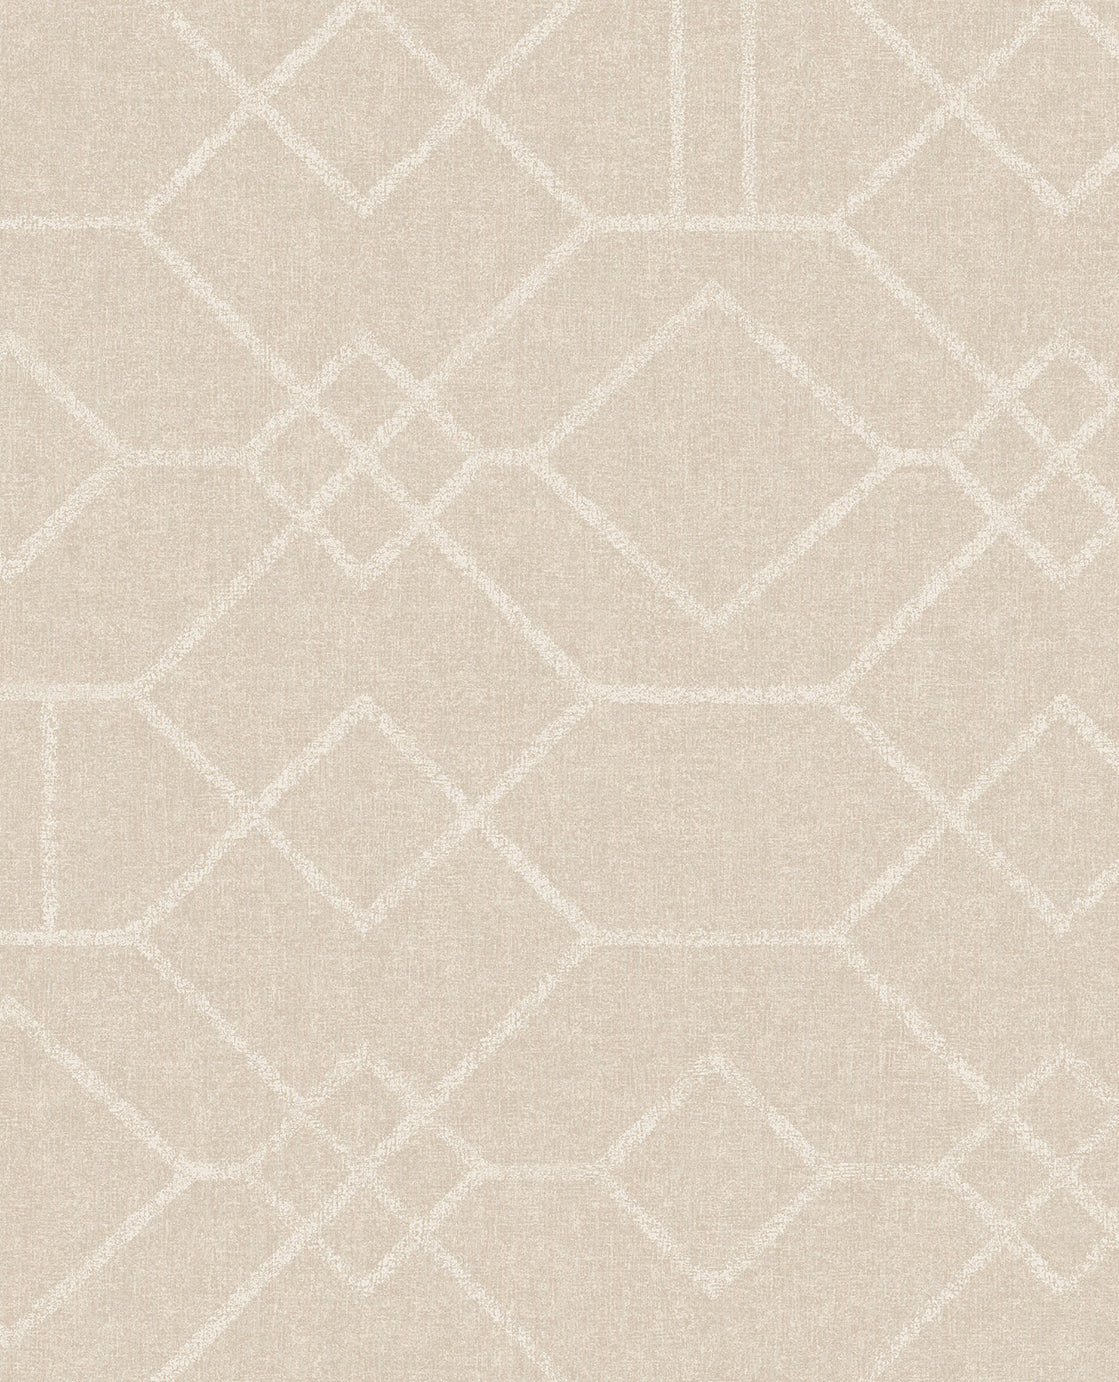 Embrace Lattice Weave wallpaper